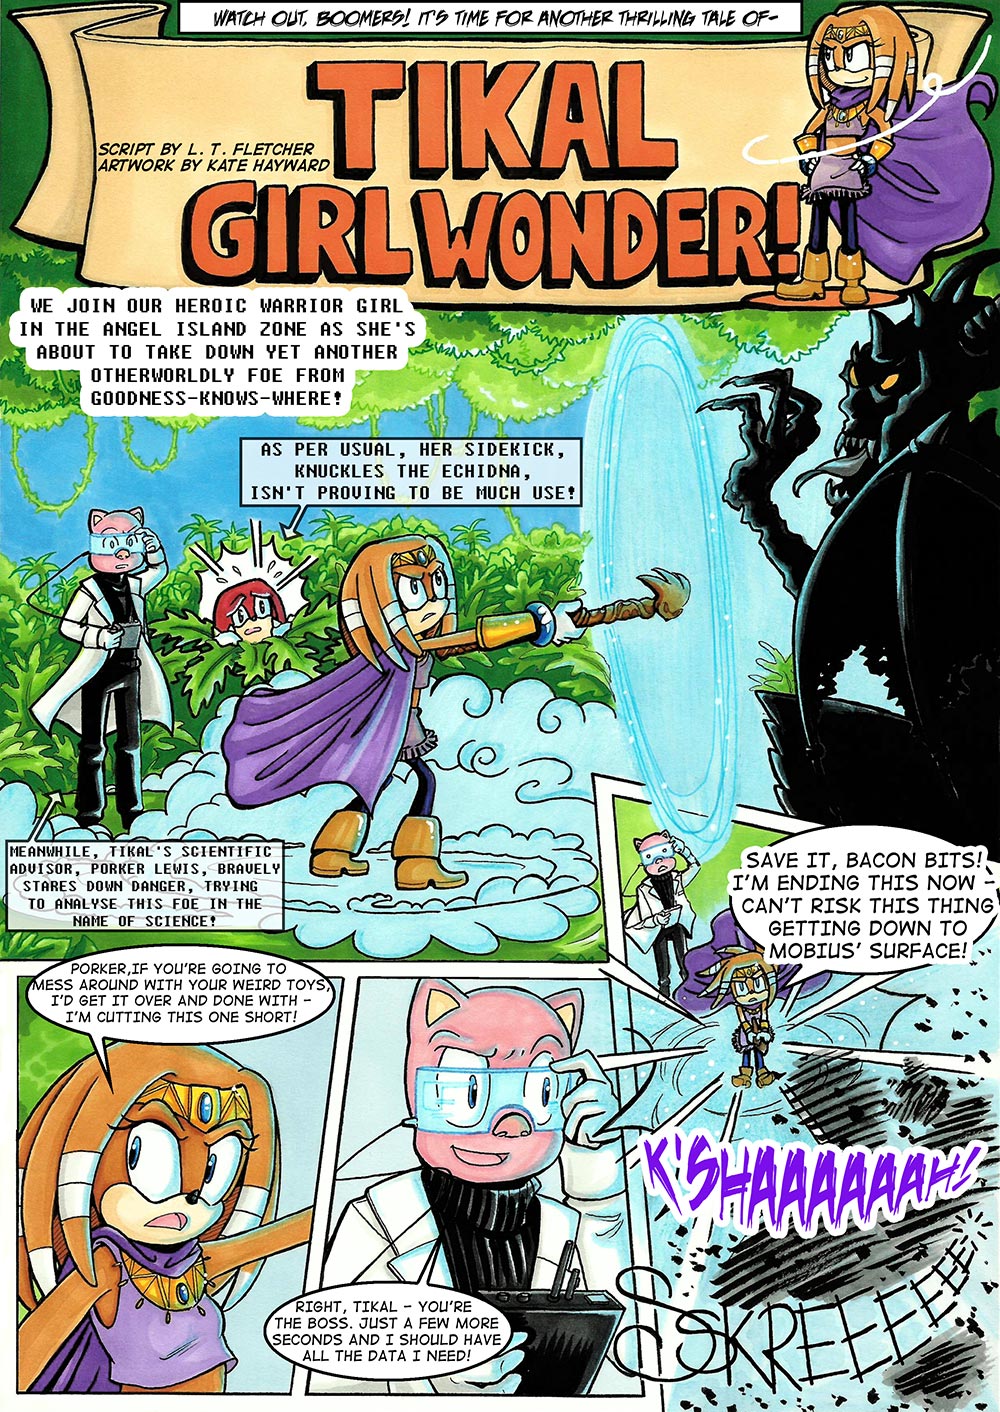 Comic Page 1